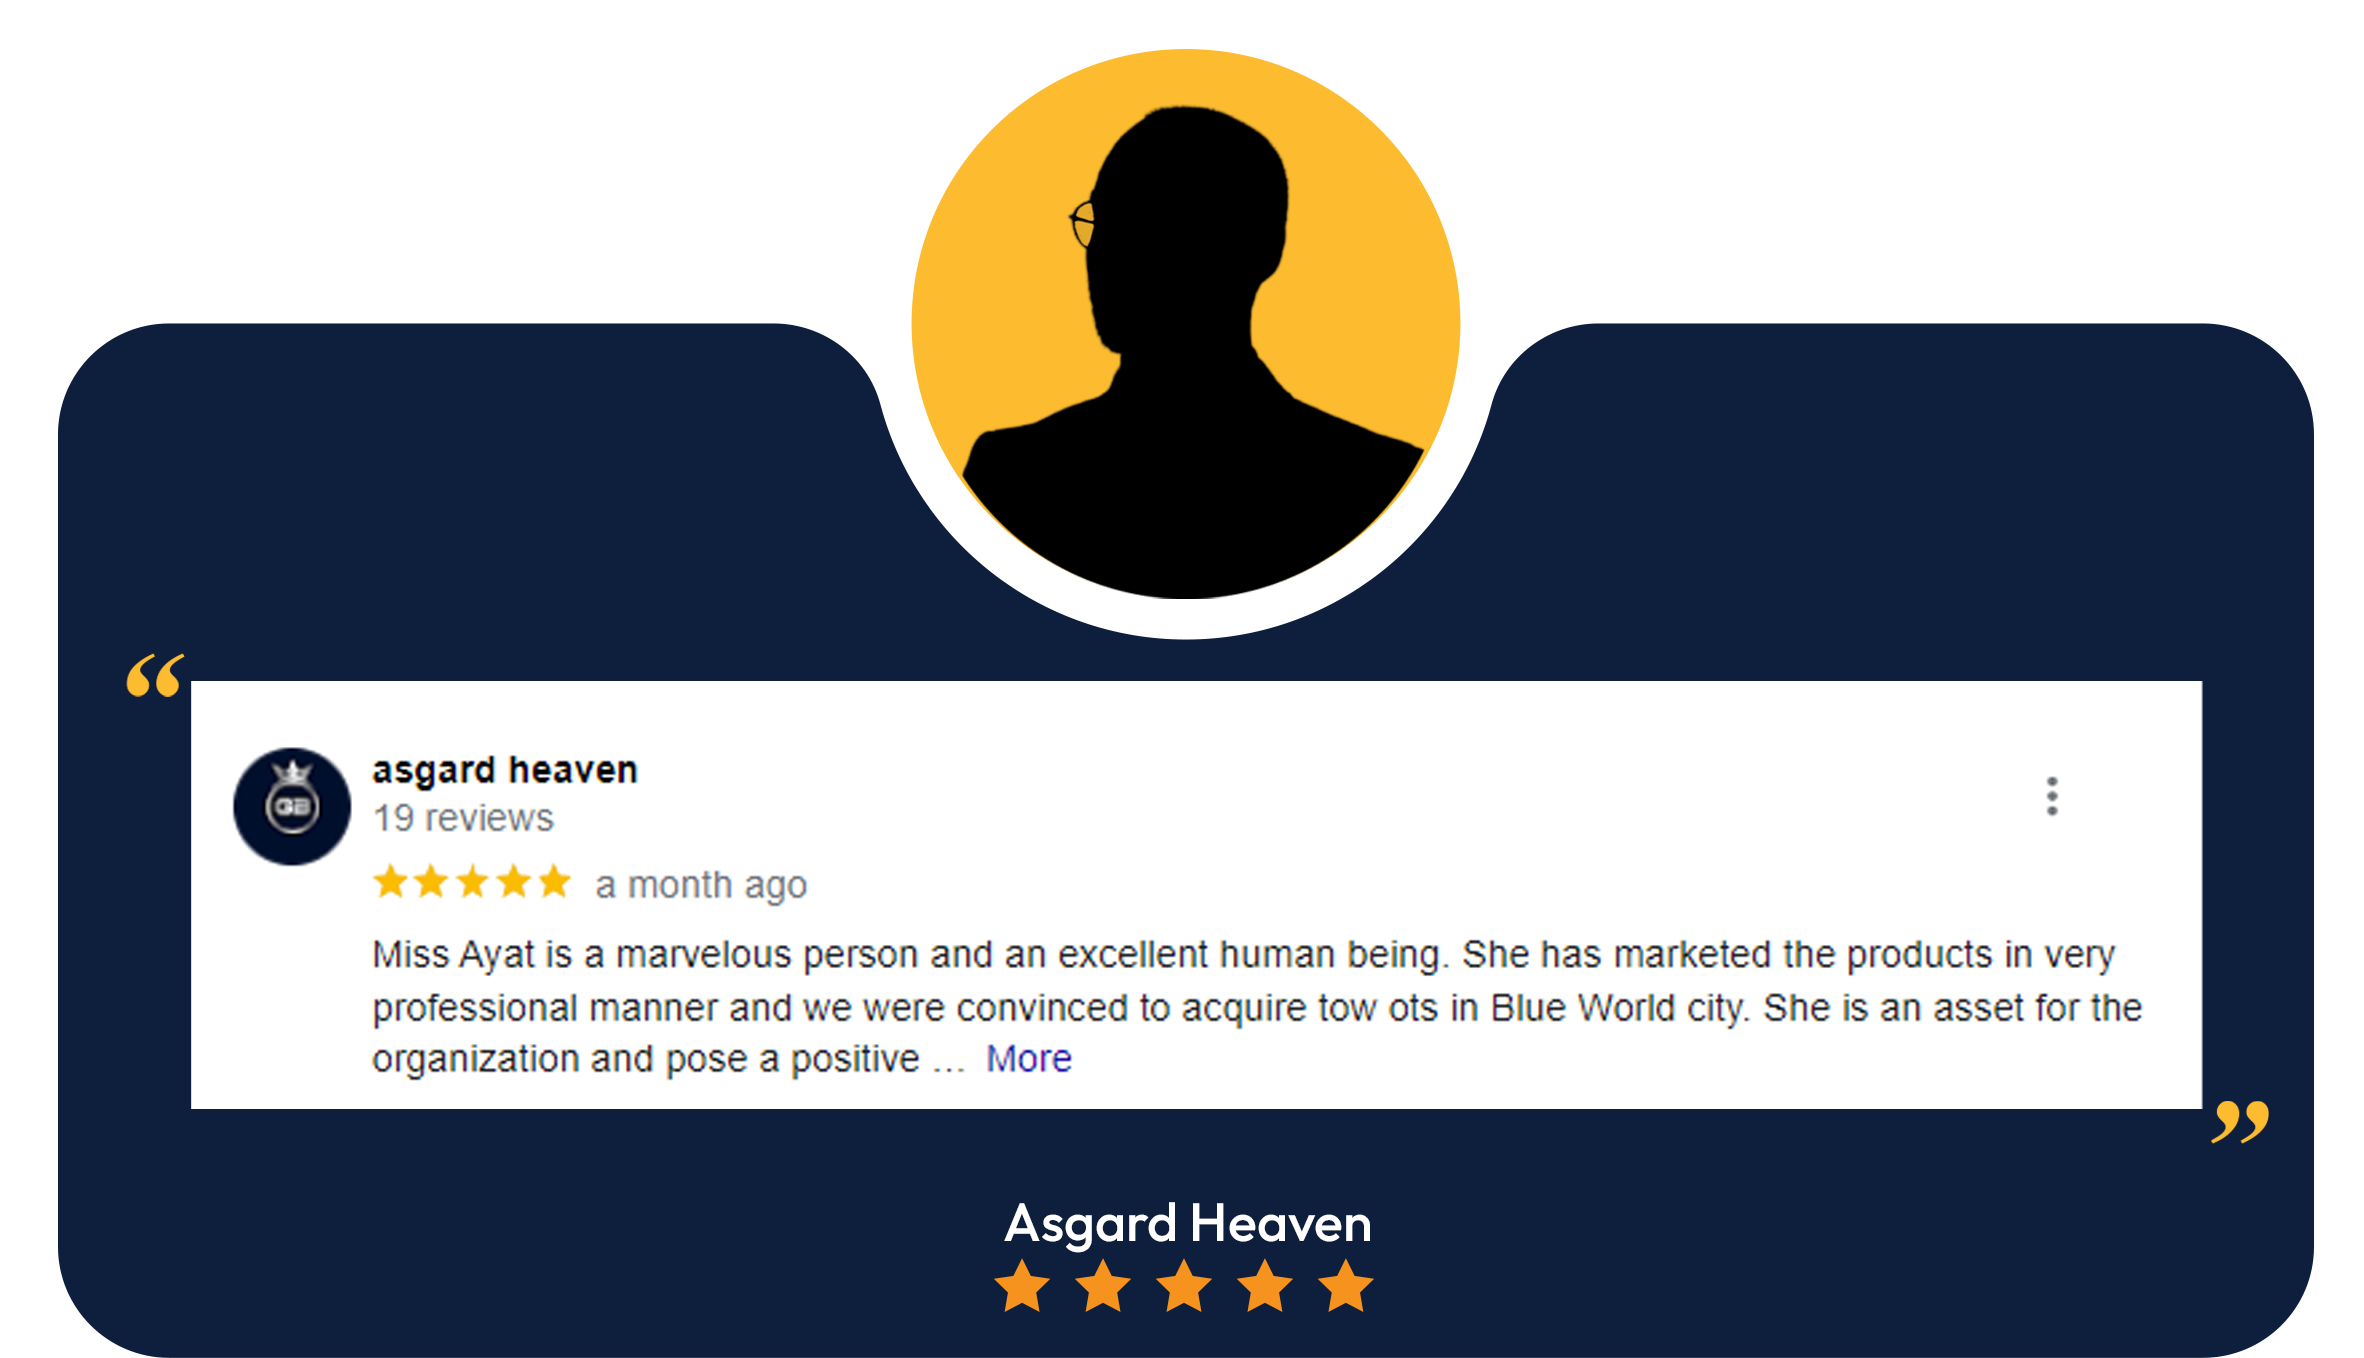 Estate Land Marketing Google Reviews by Asgard Heaven